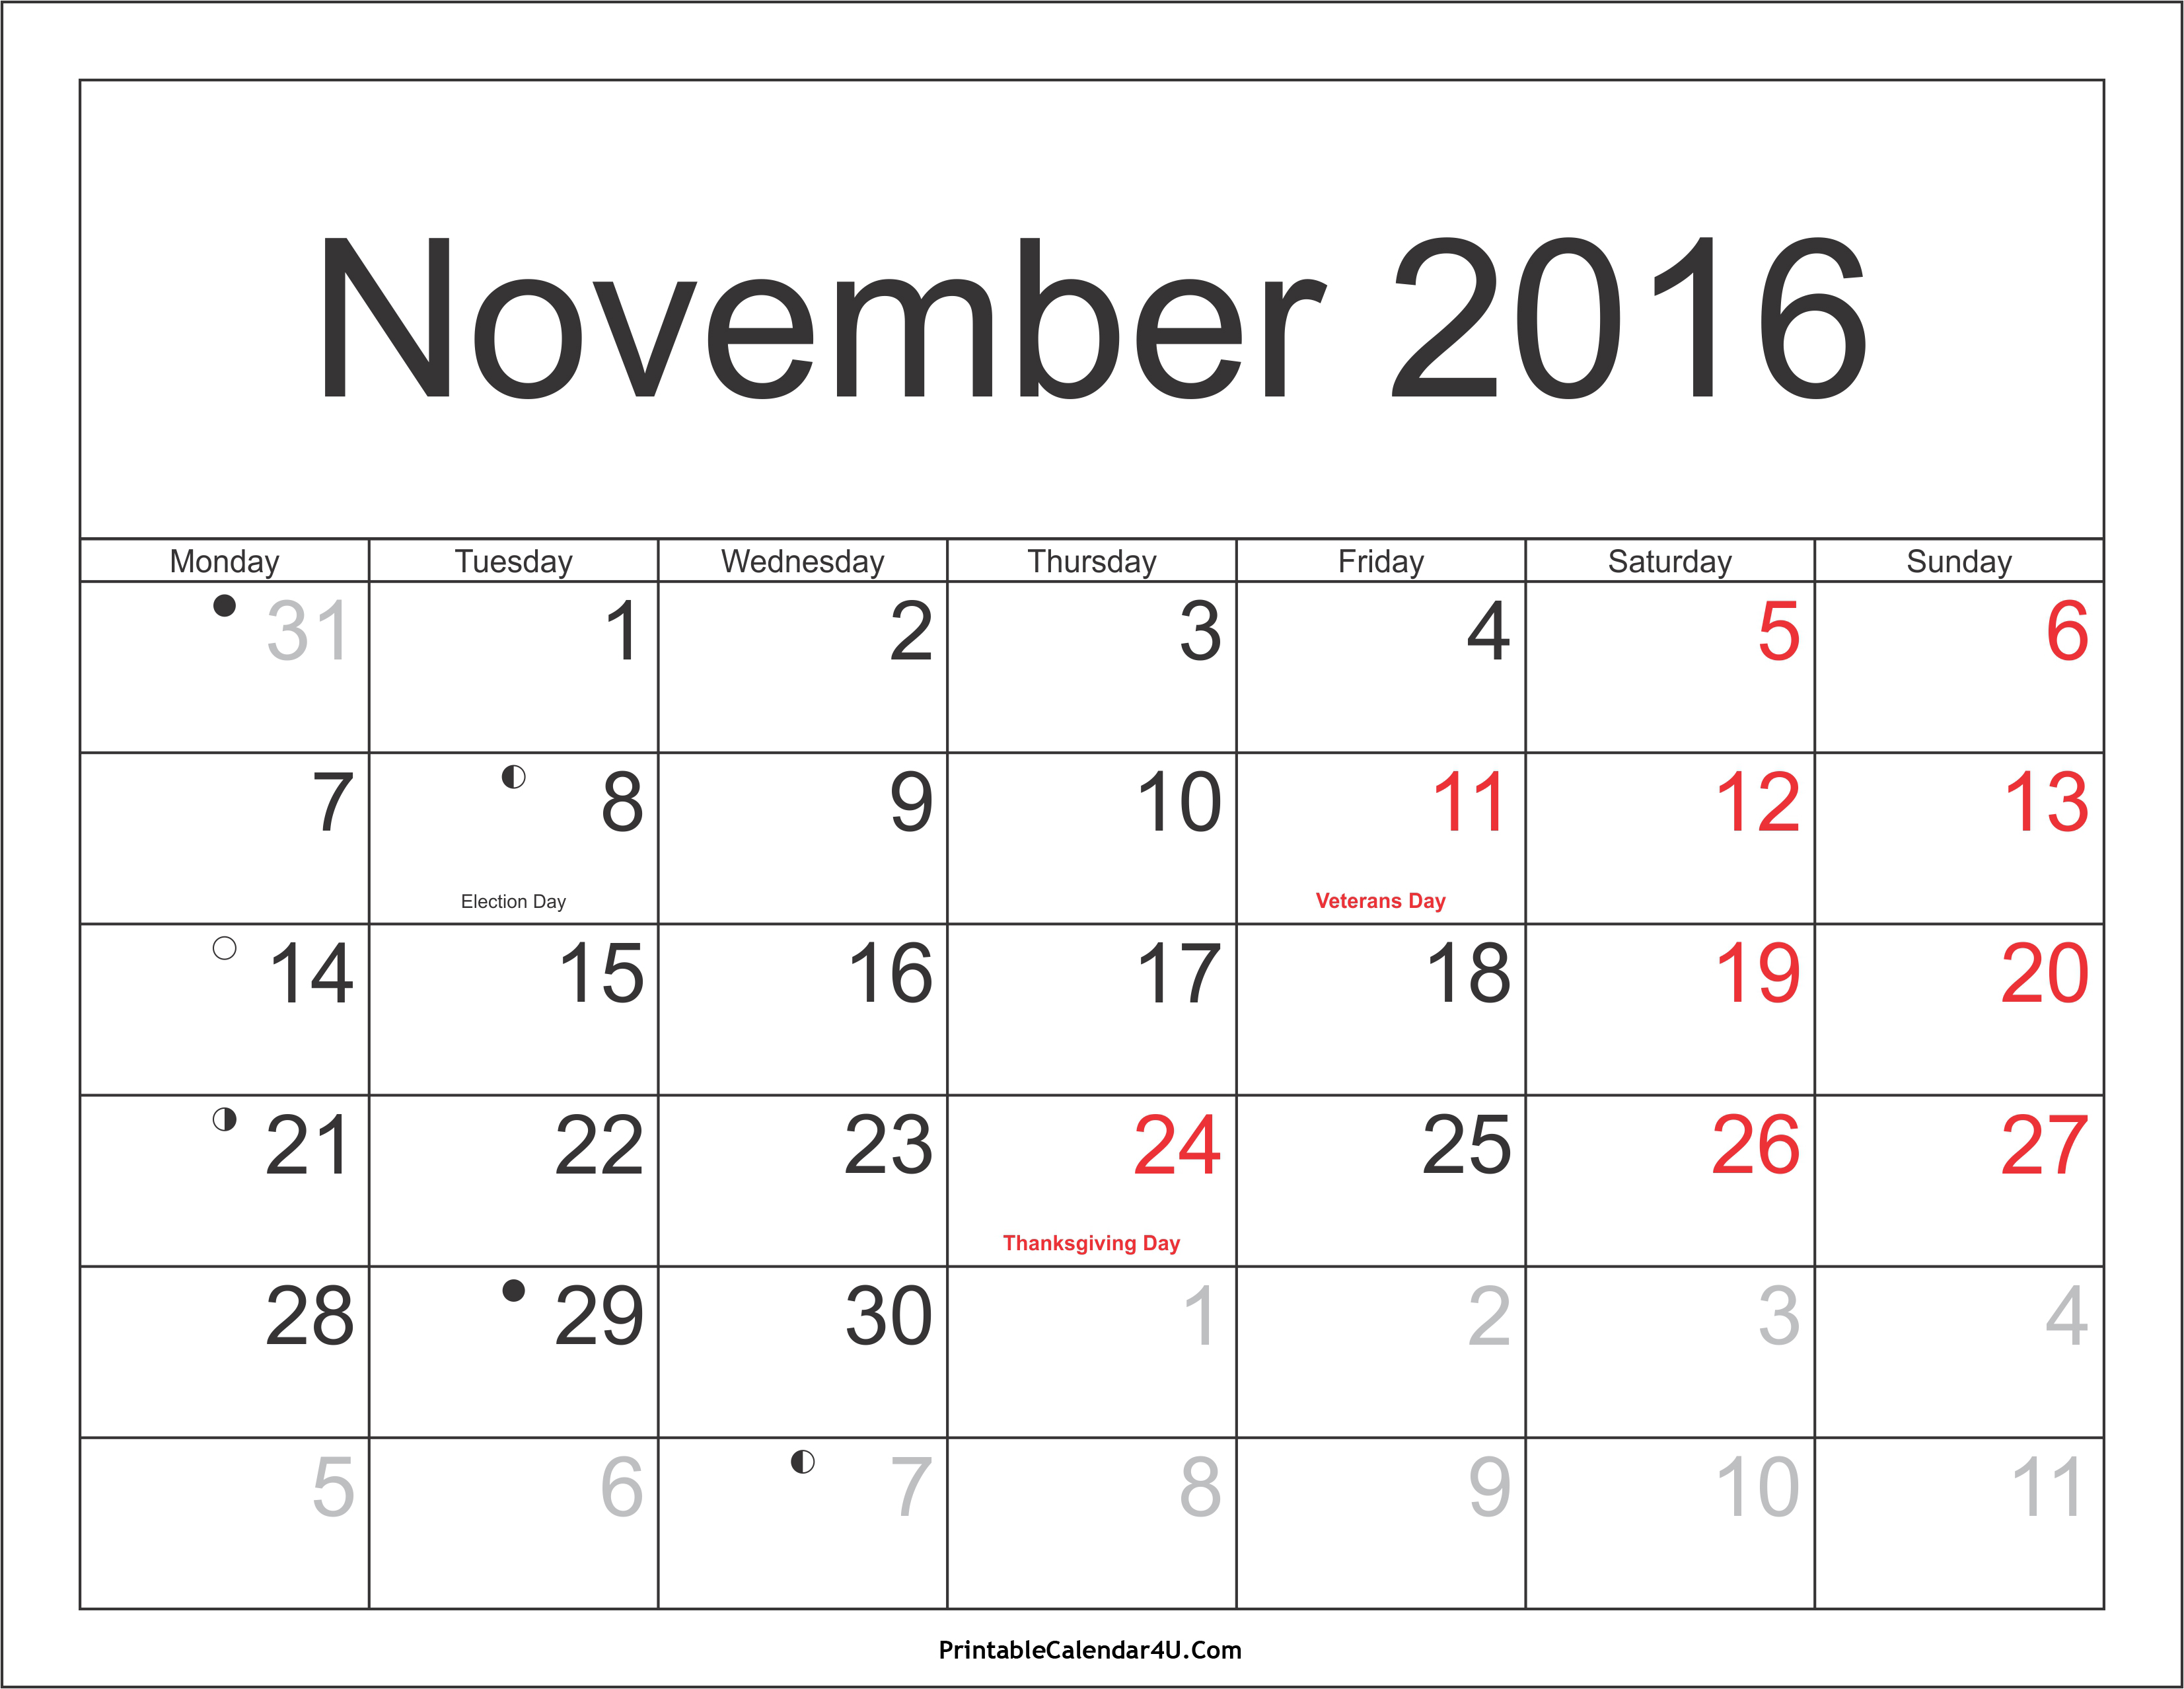 November 2016 Calendar Printable with Holidays PDF and 